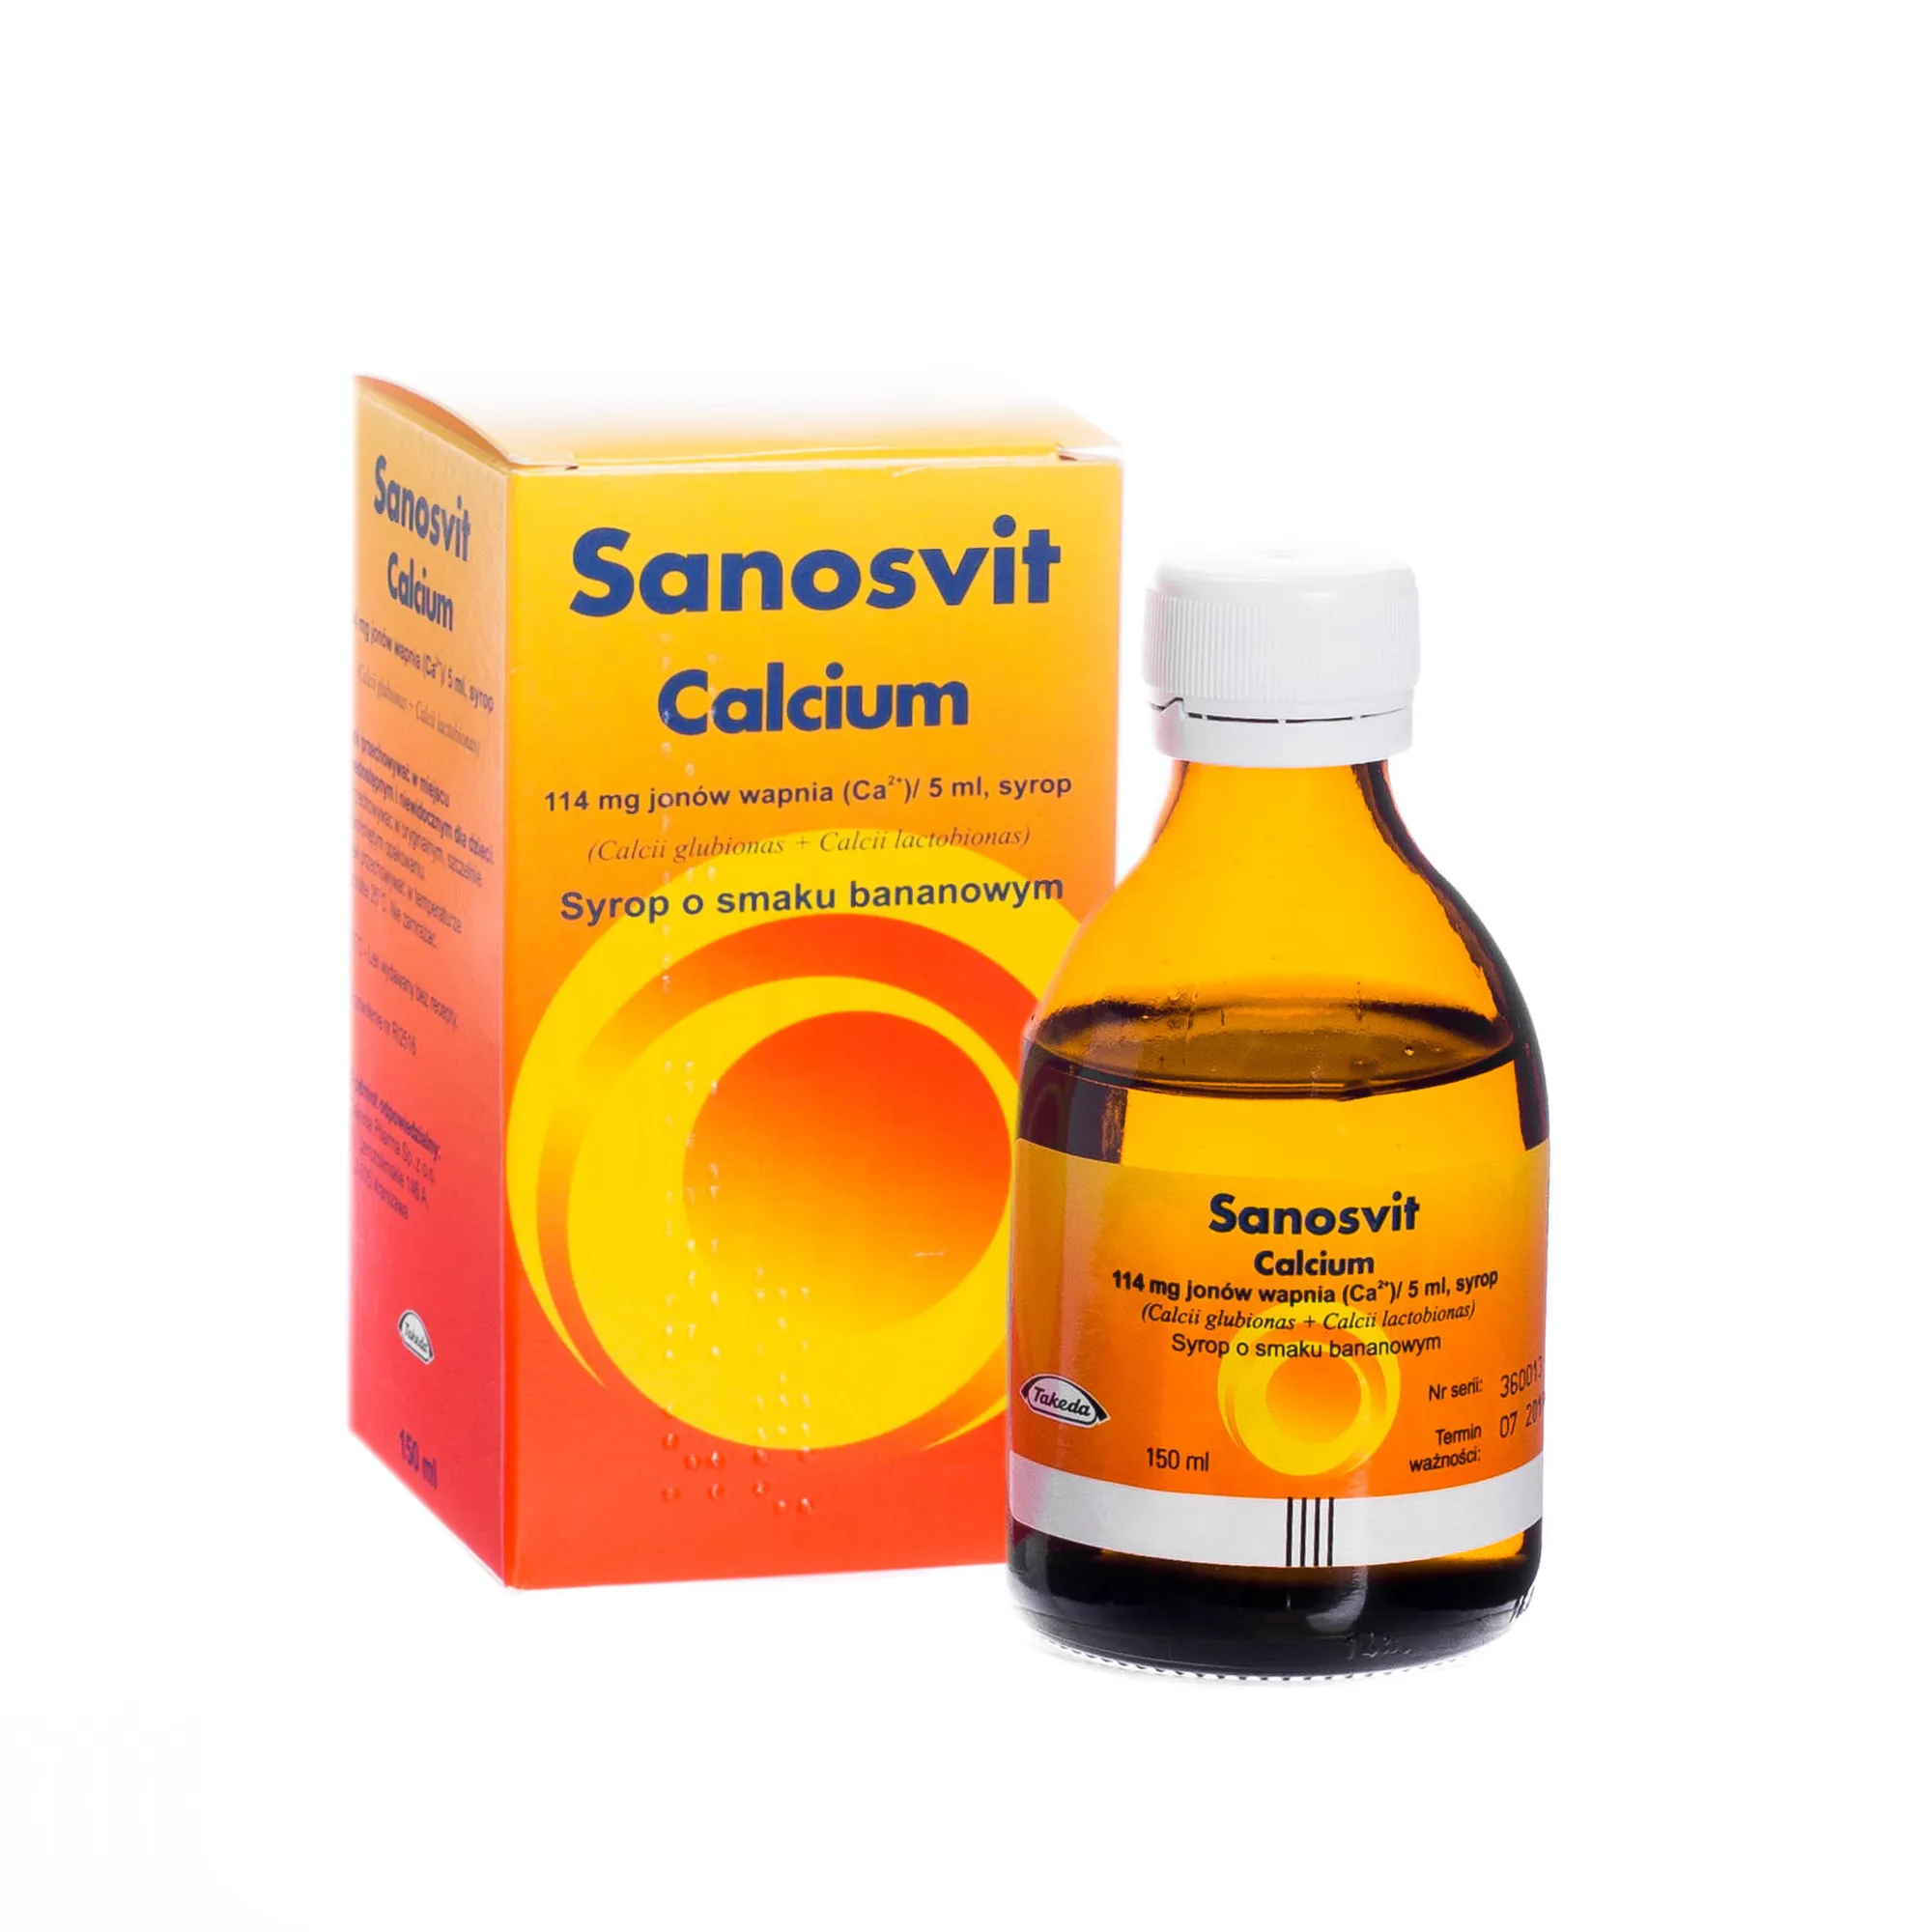 Sanosvit Calcium - syrop o smaku bananowym, 150 ml. 